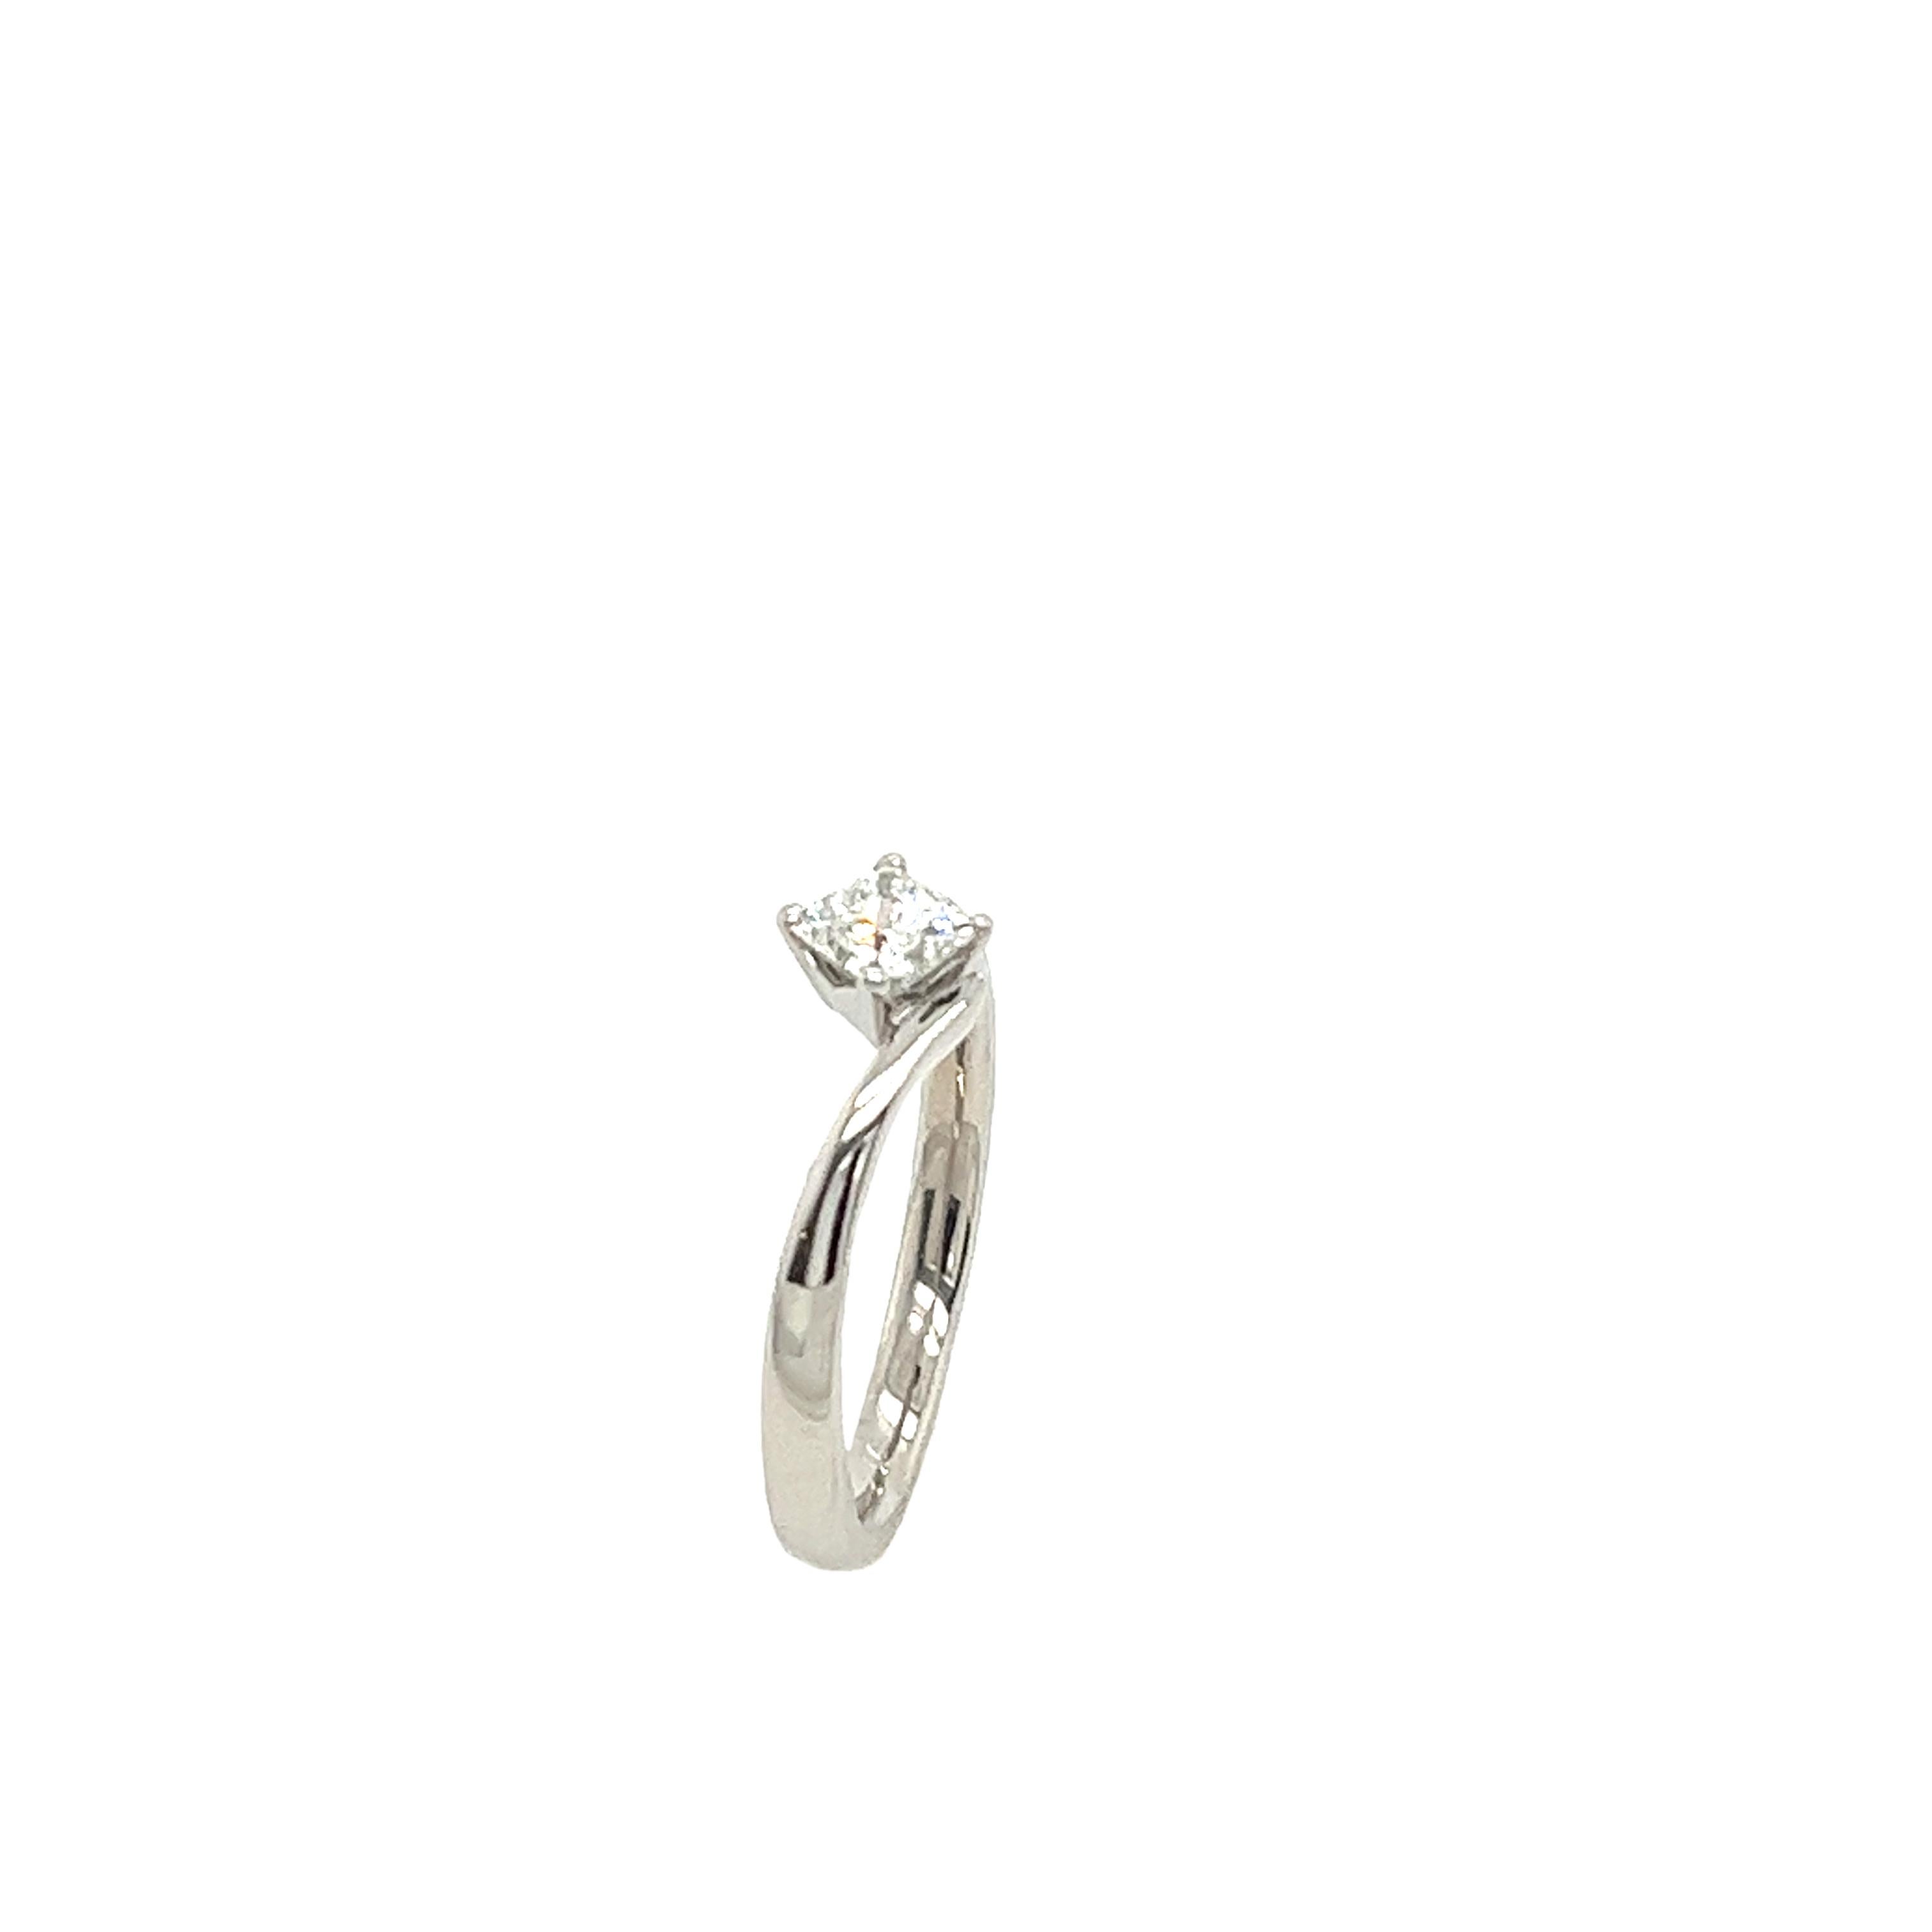 Platinum Solitaire Diamond Ring Set With 0.40ct Princess Cut Diamond For Sale 2